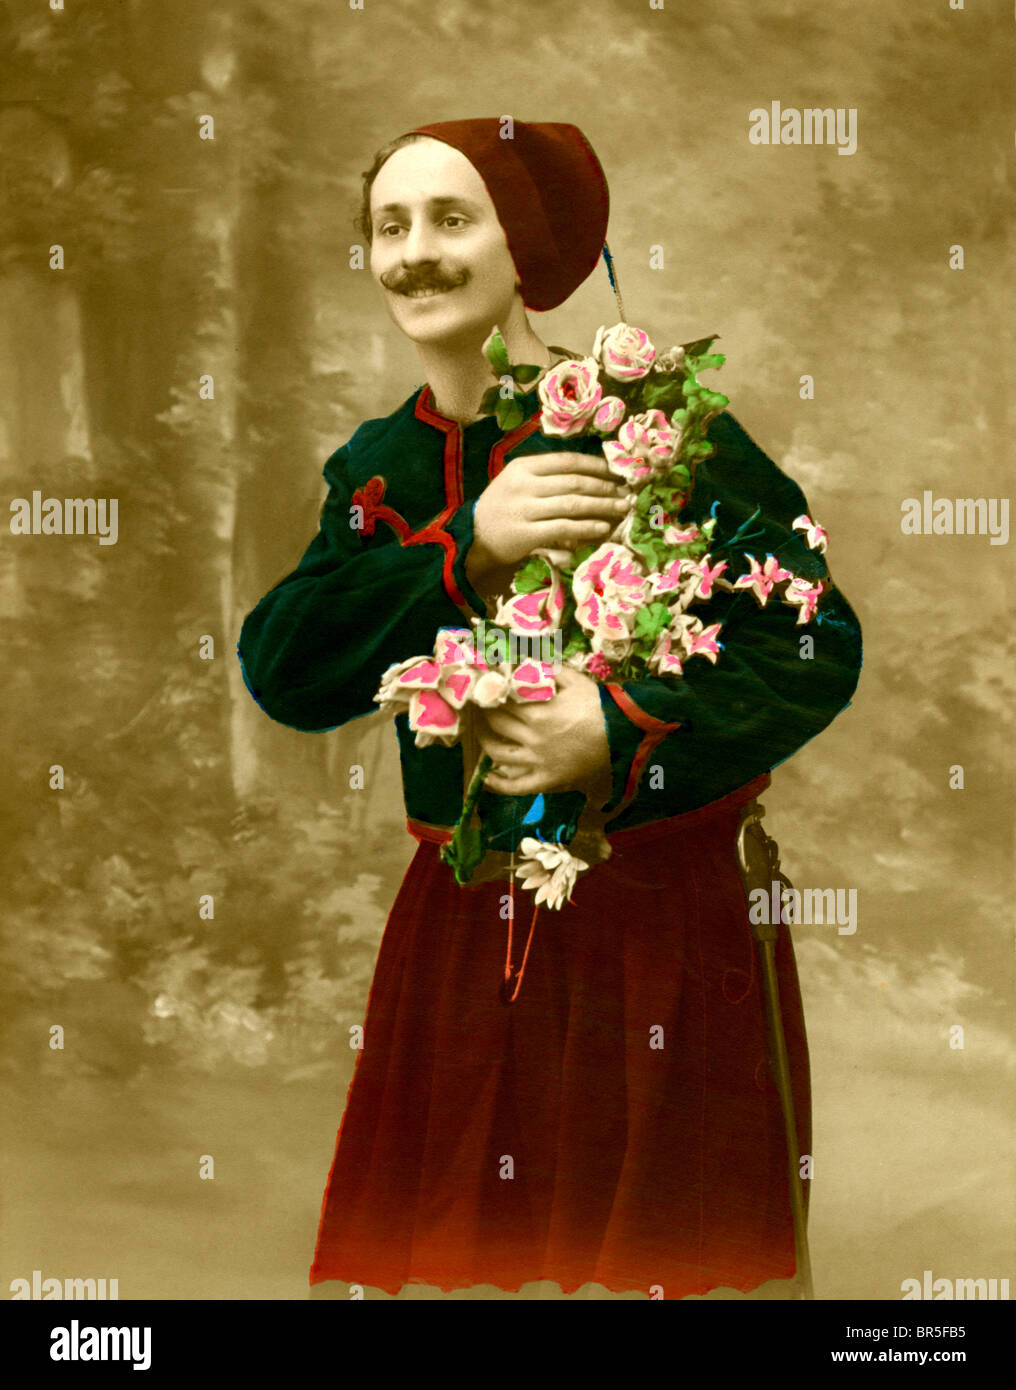 Historic photograph, man with flowers, around 1915 Stock Photo